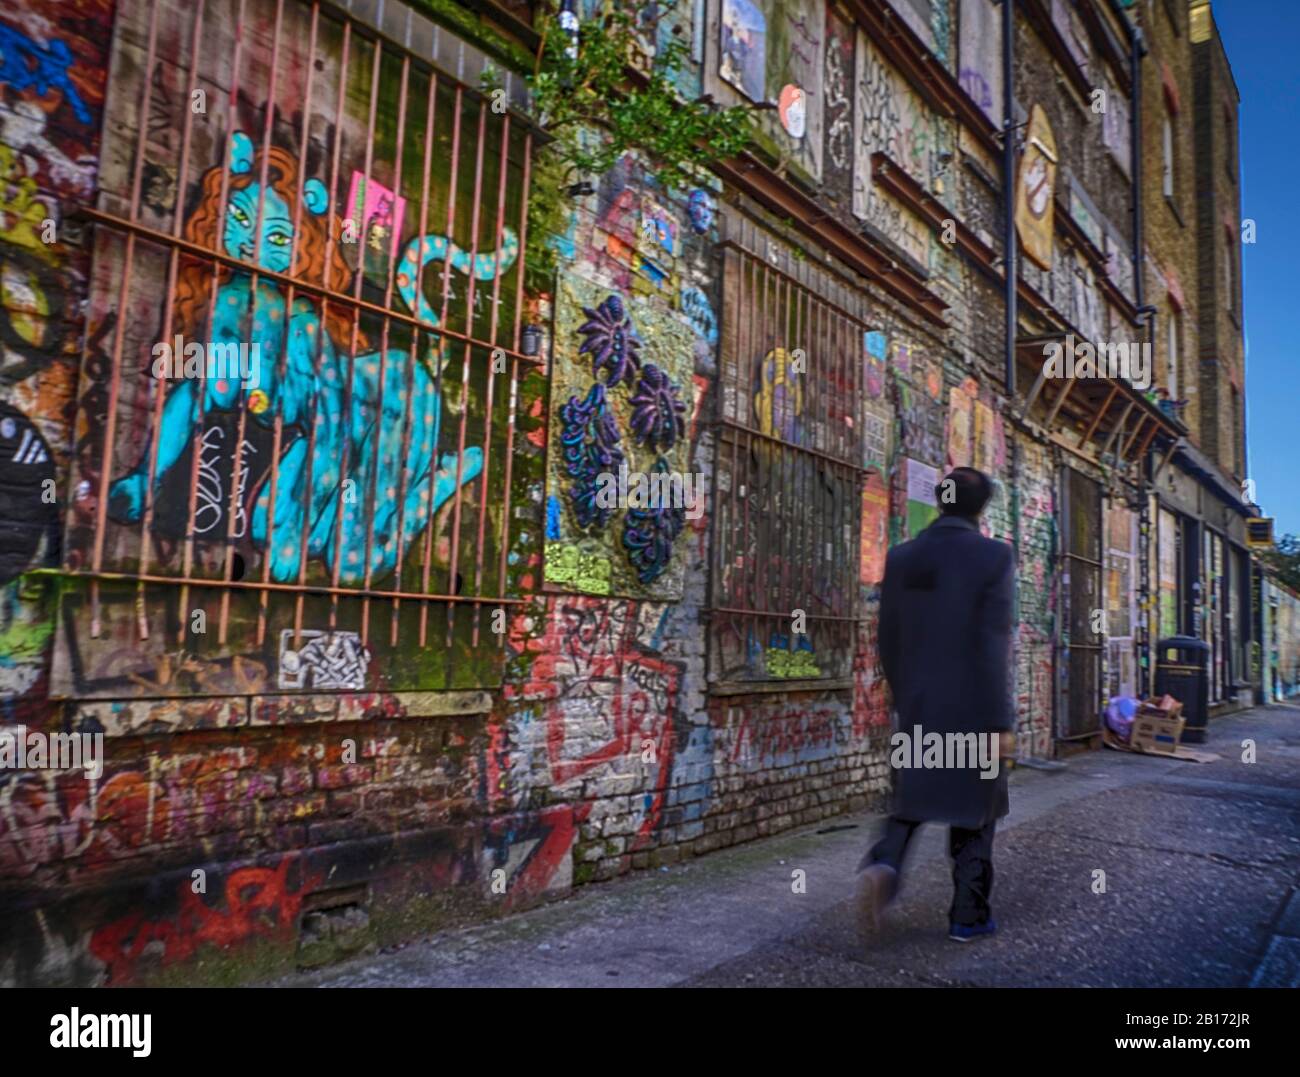 Londra, Shoreditch, Graffiti, Street art, poster, plakat, strada, colore, ricco, Foto Stock